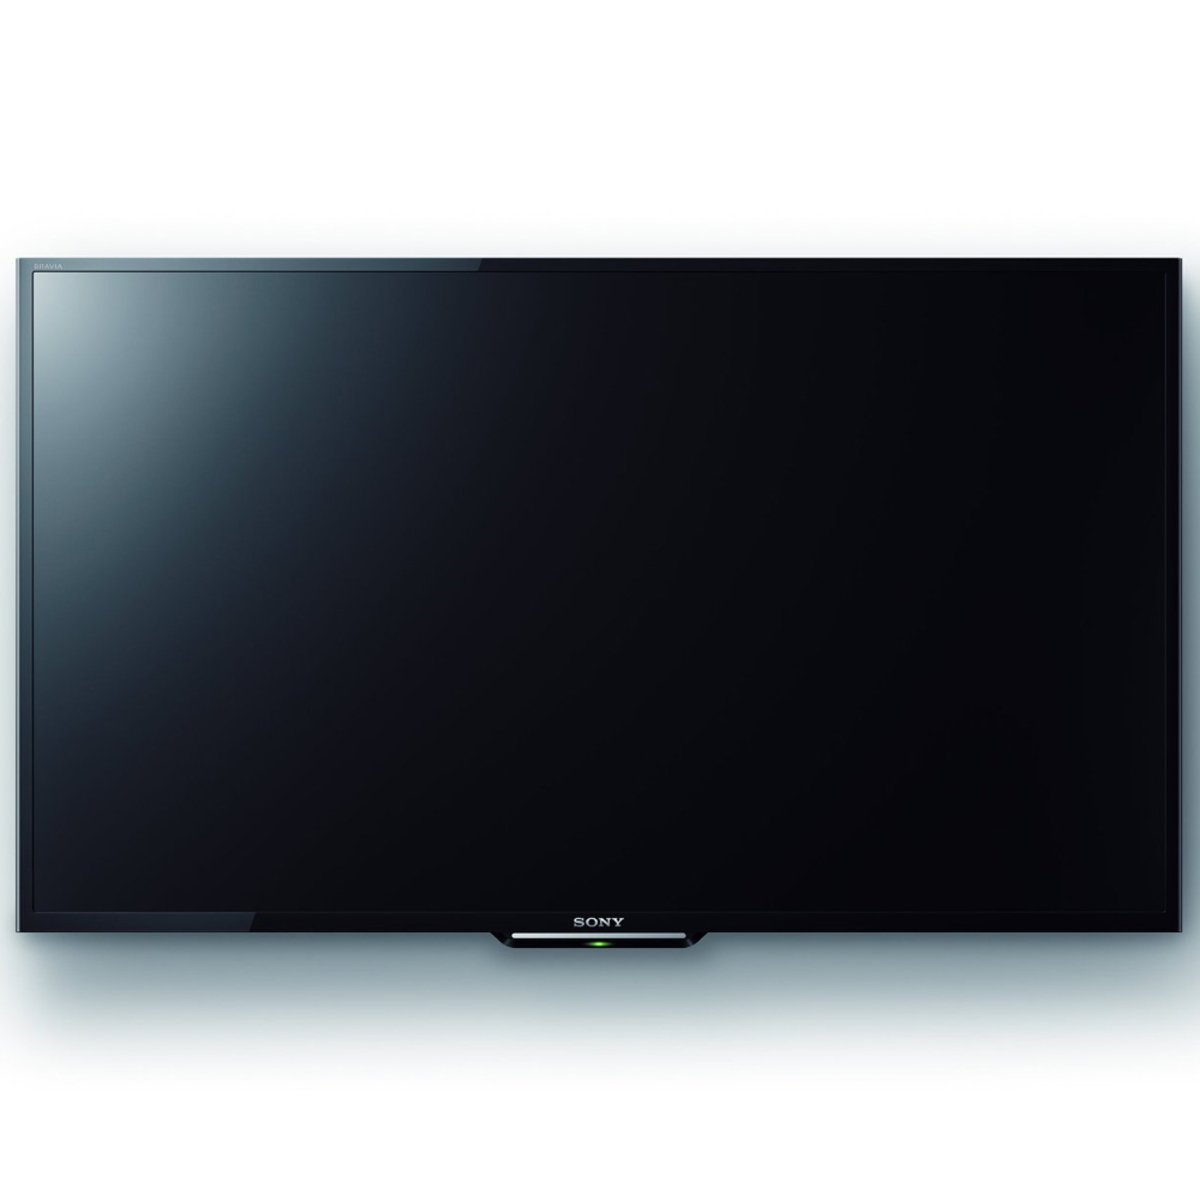 Sony LED TV KLV-48R562C 48inch